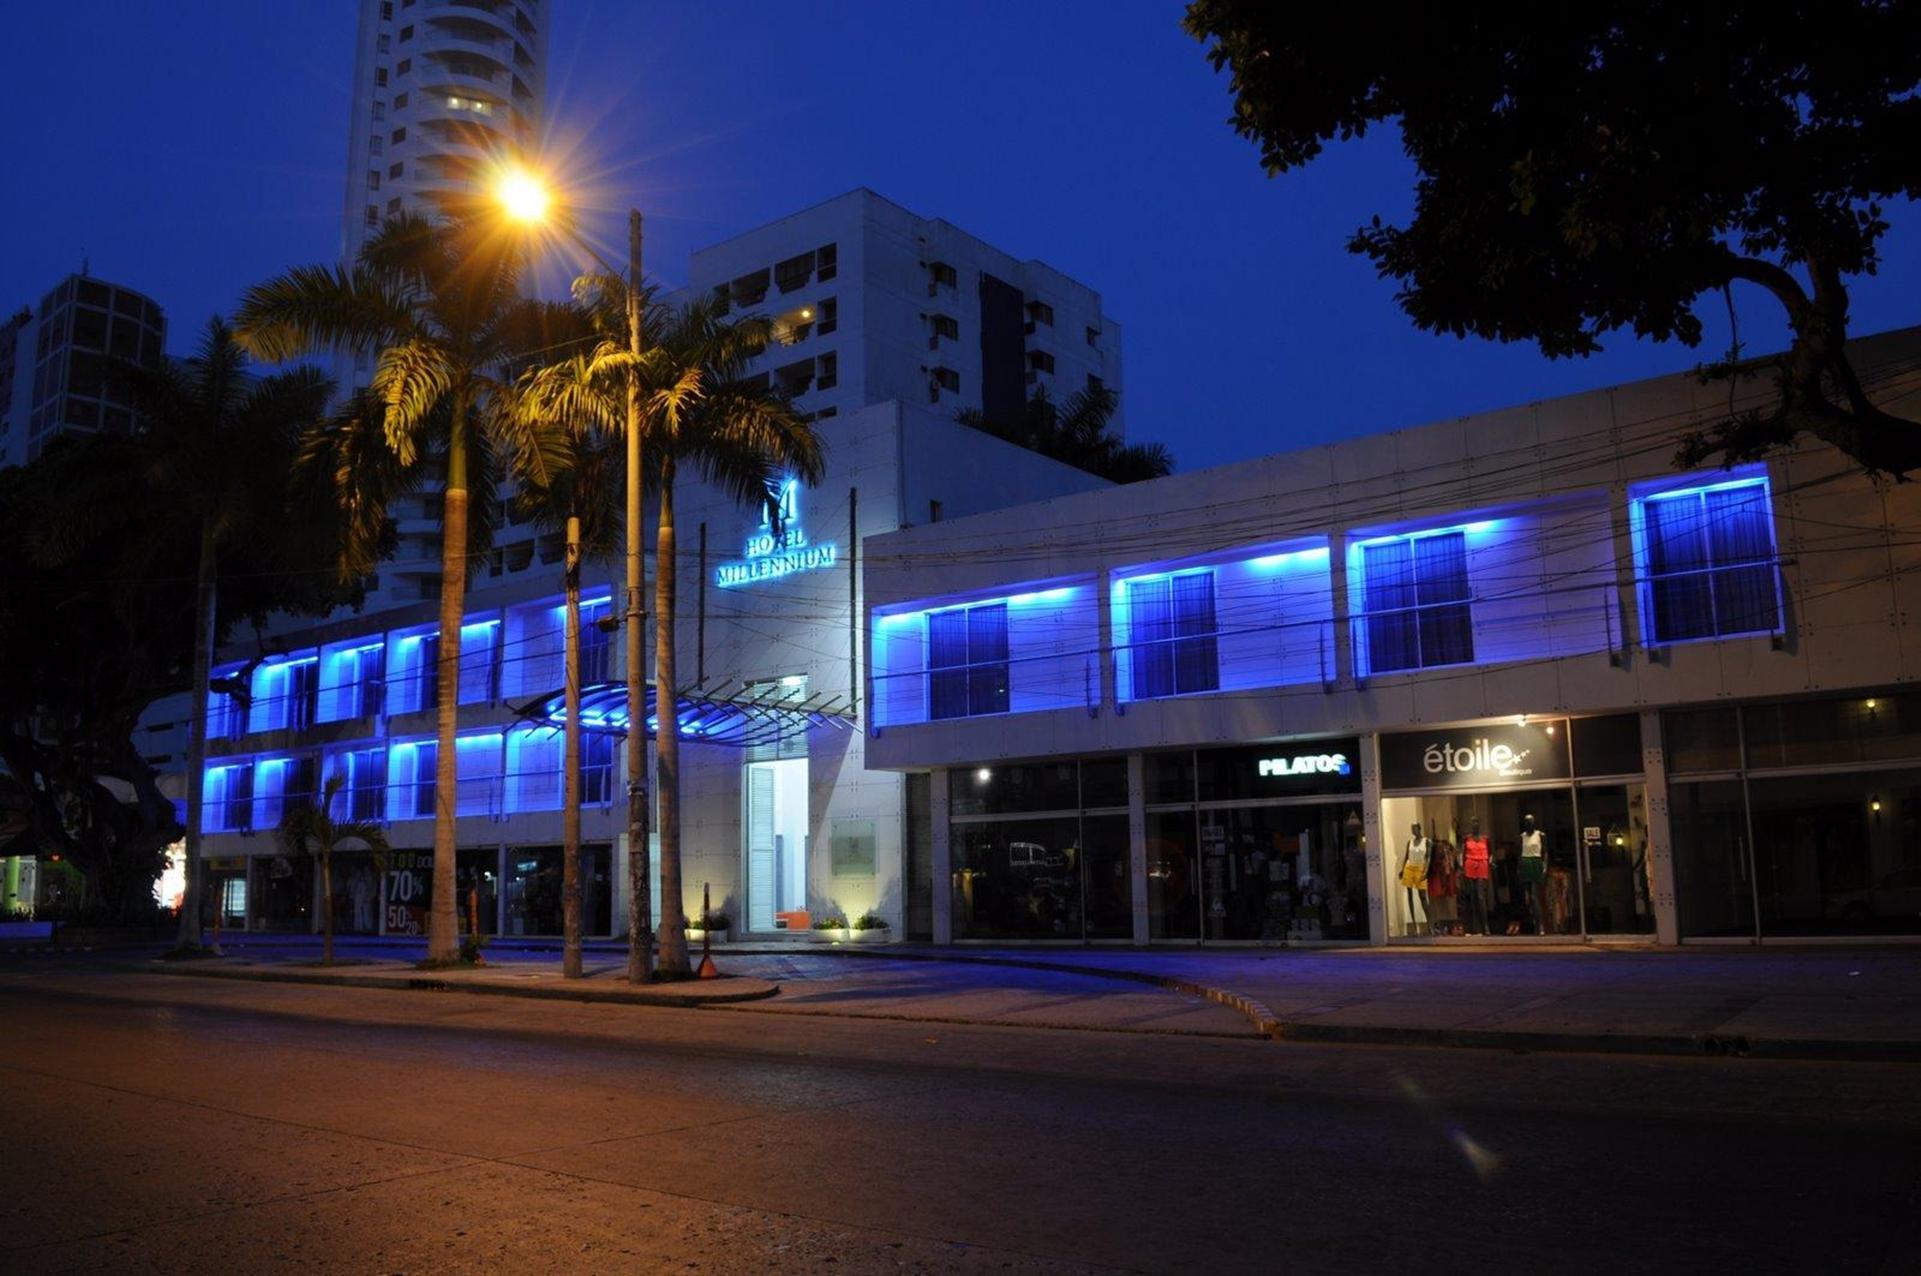 Madisson Boutique Hotel Cartagena Eksteriør bilde